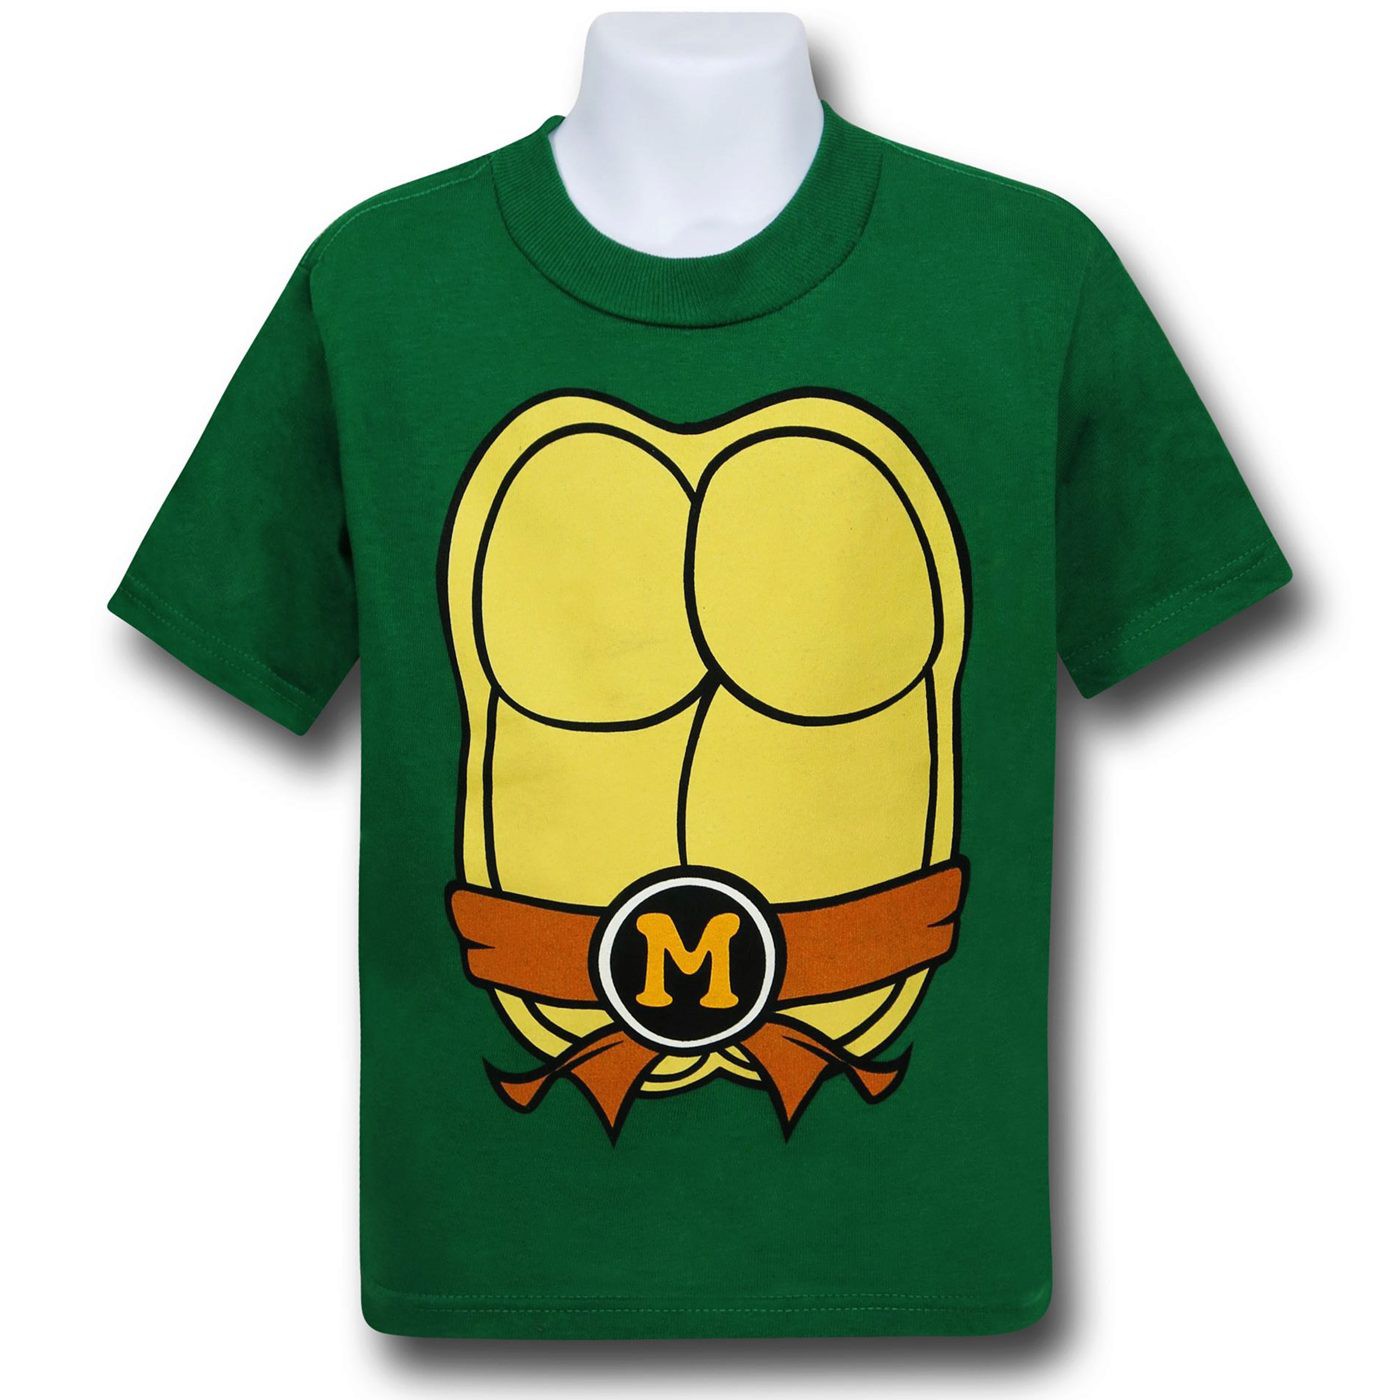 TMNT Michelangelo Kids Costume T-Shirt